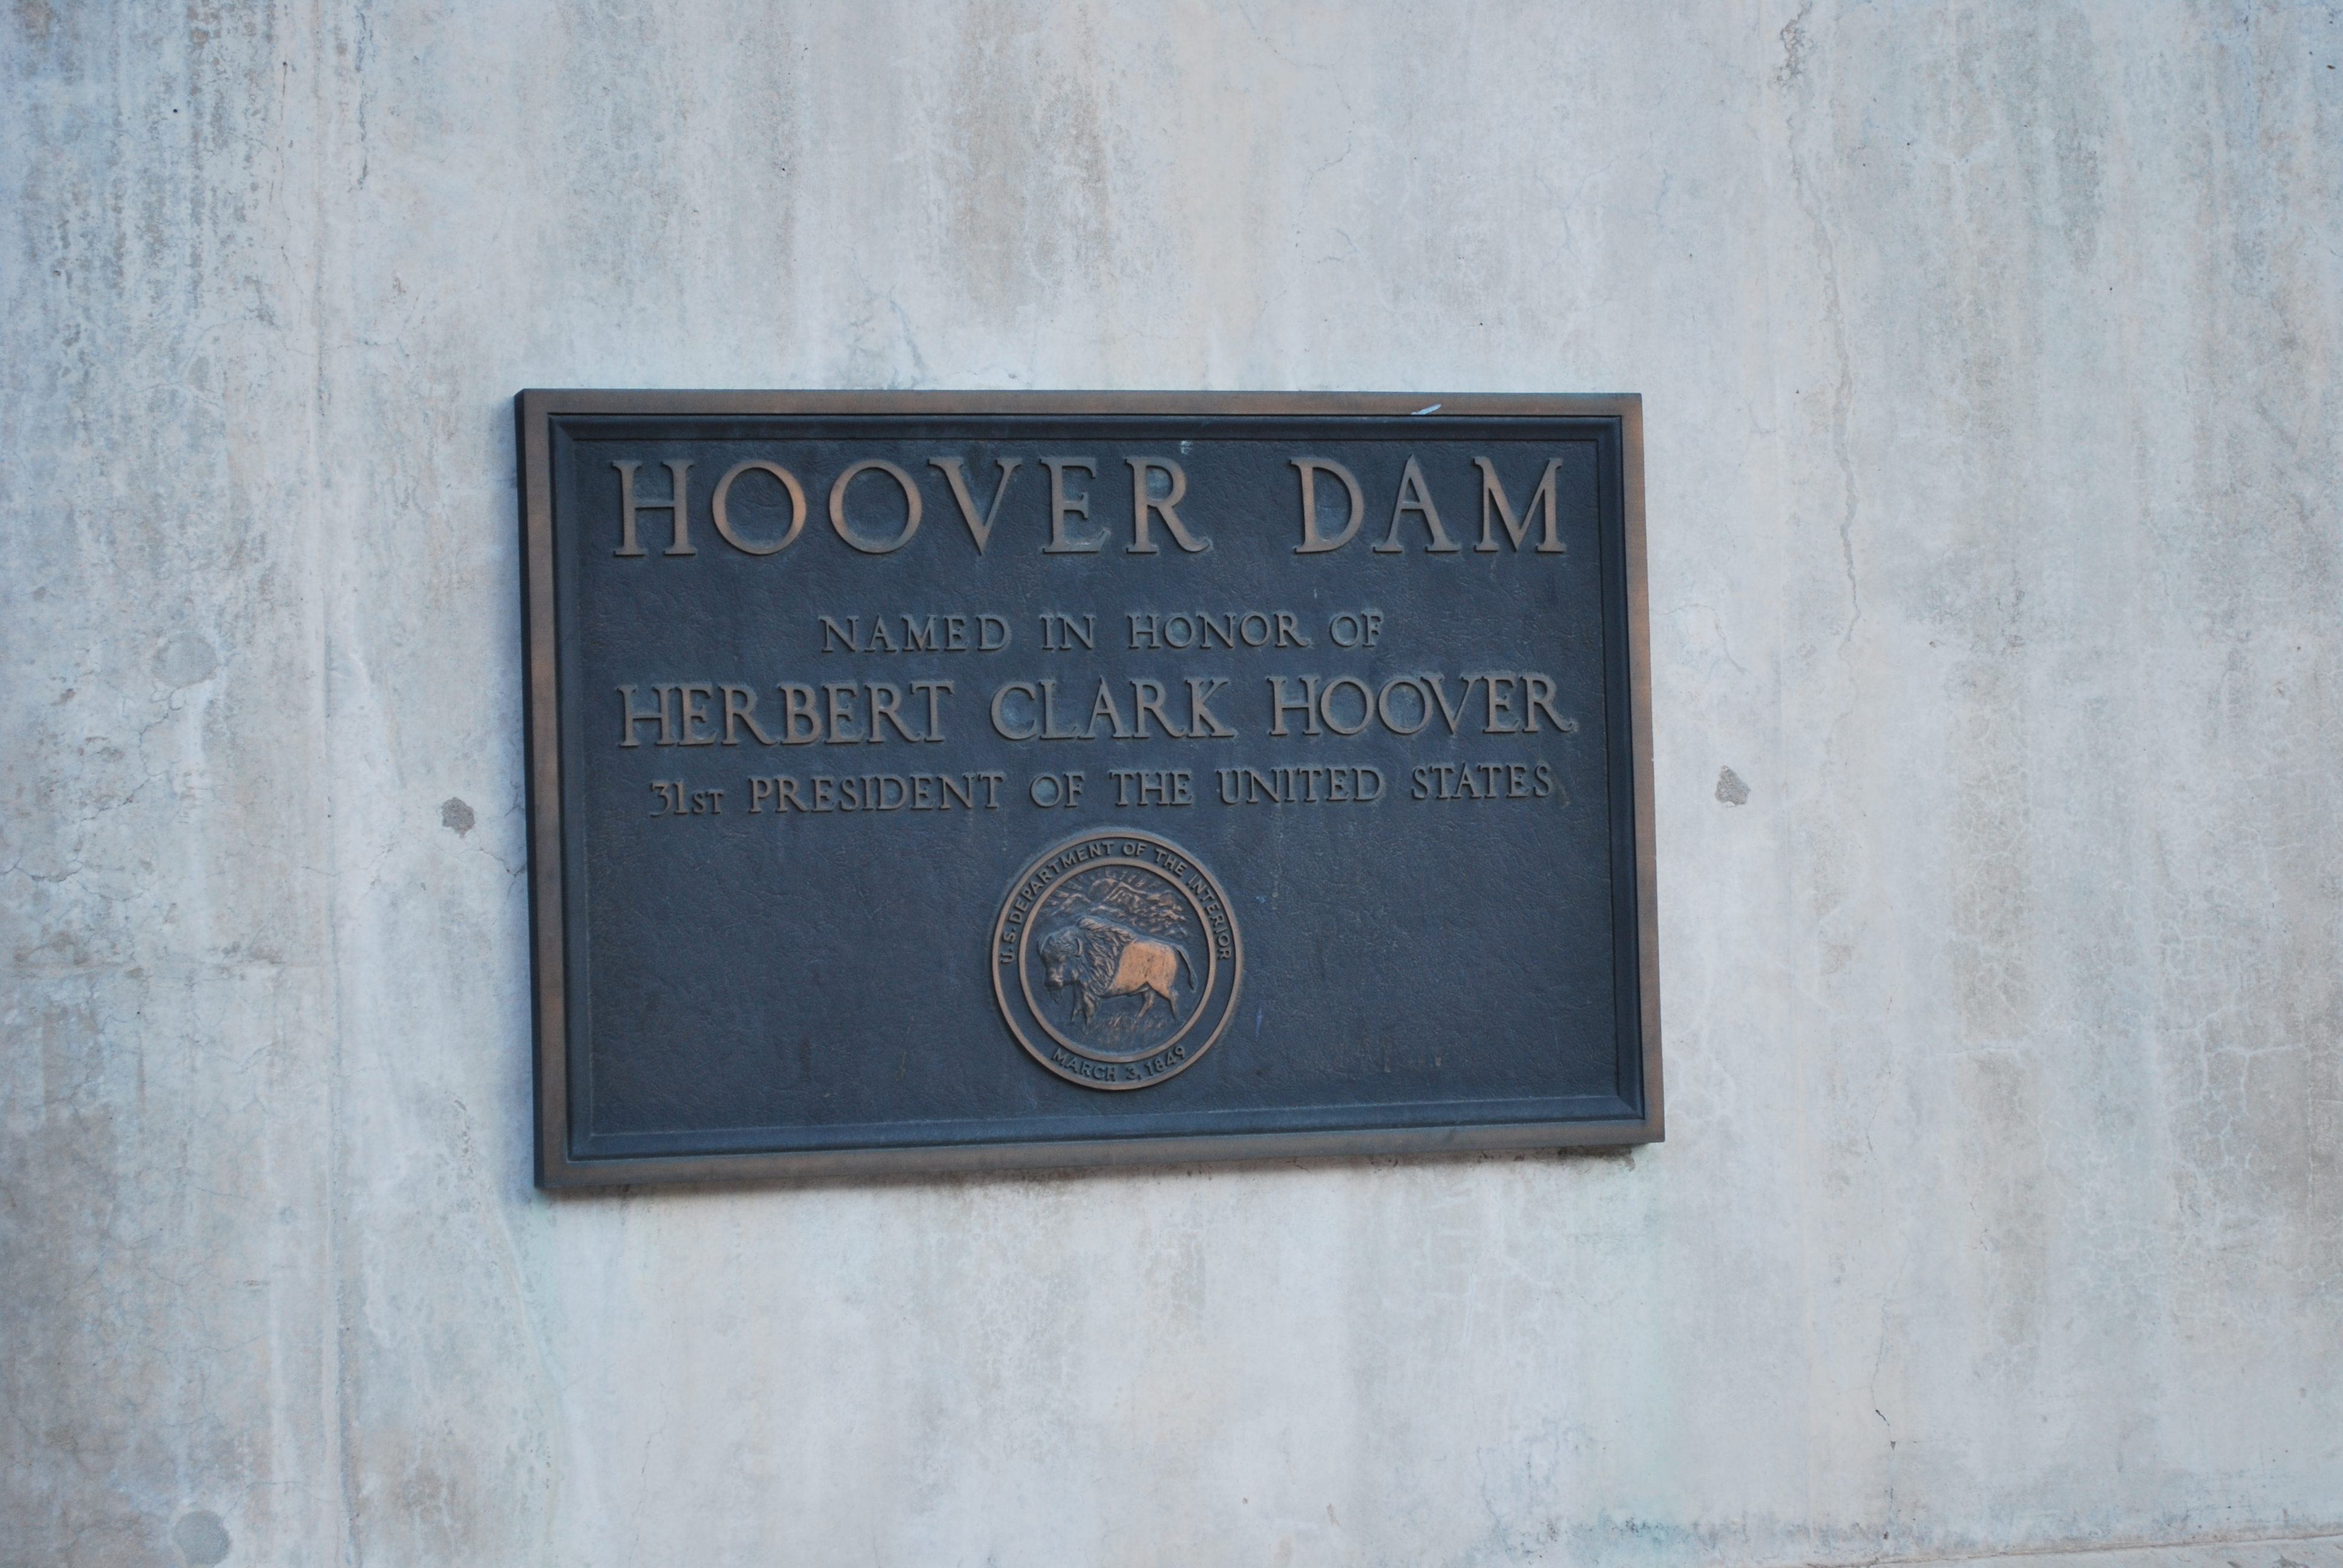 Hoover dam photo